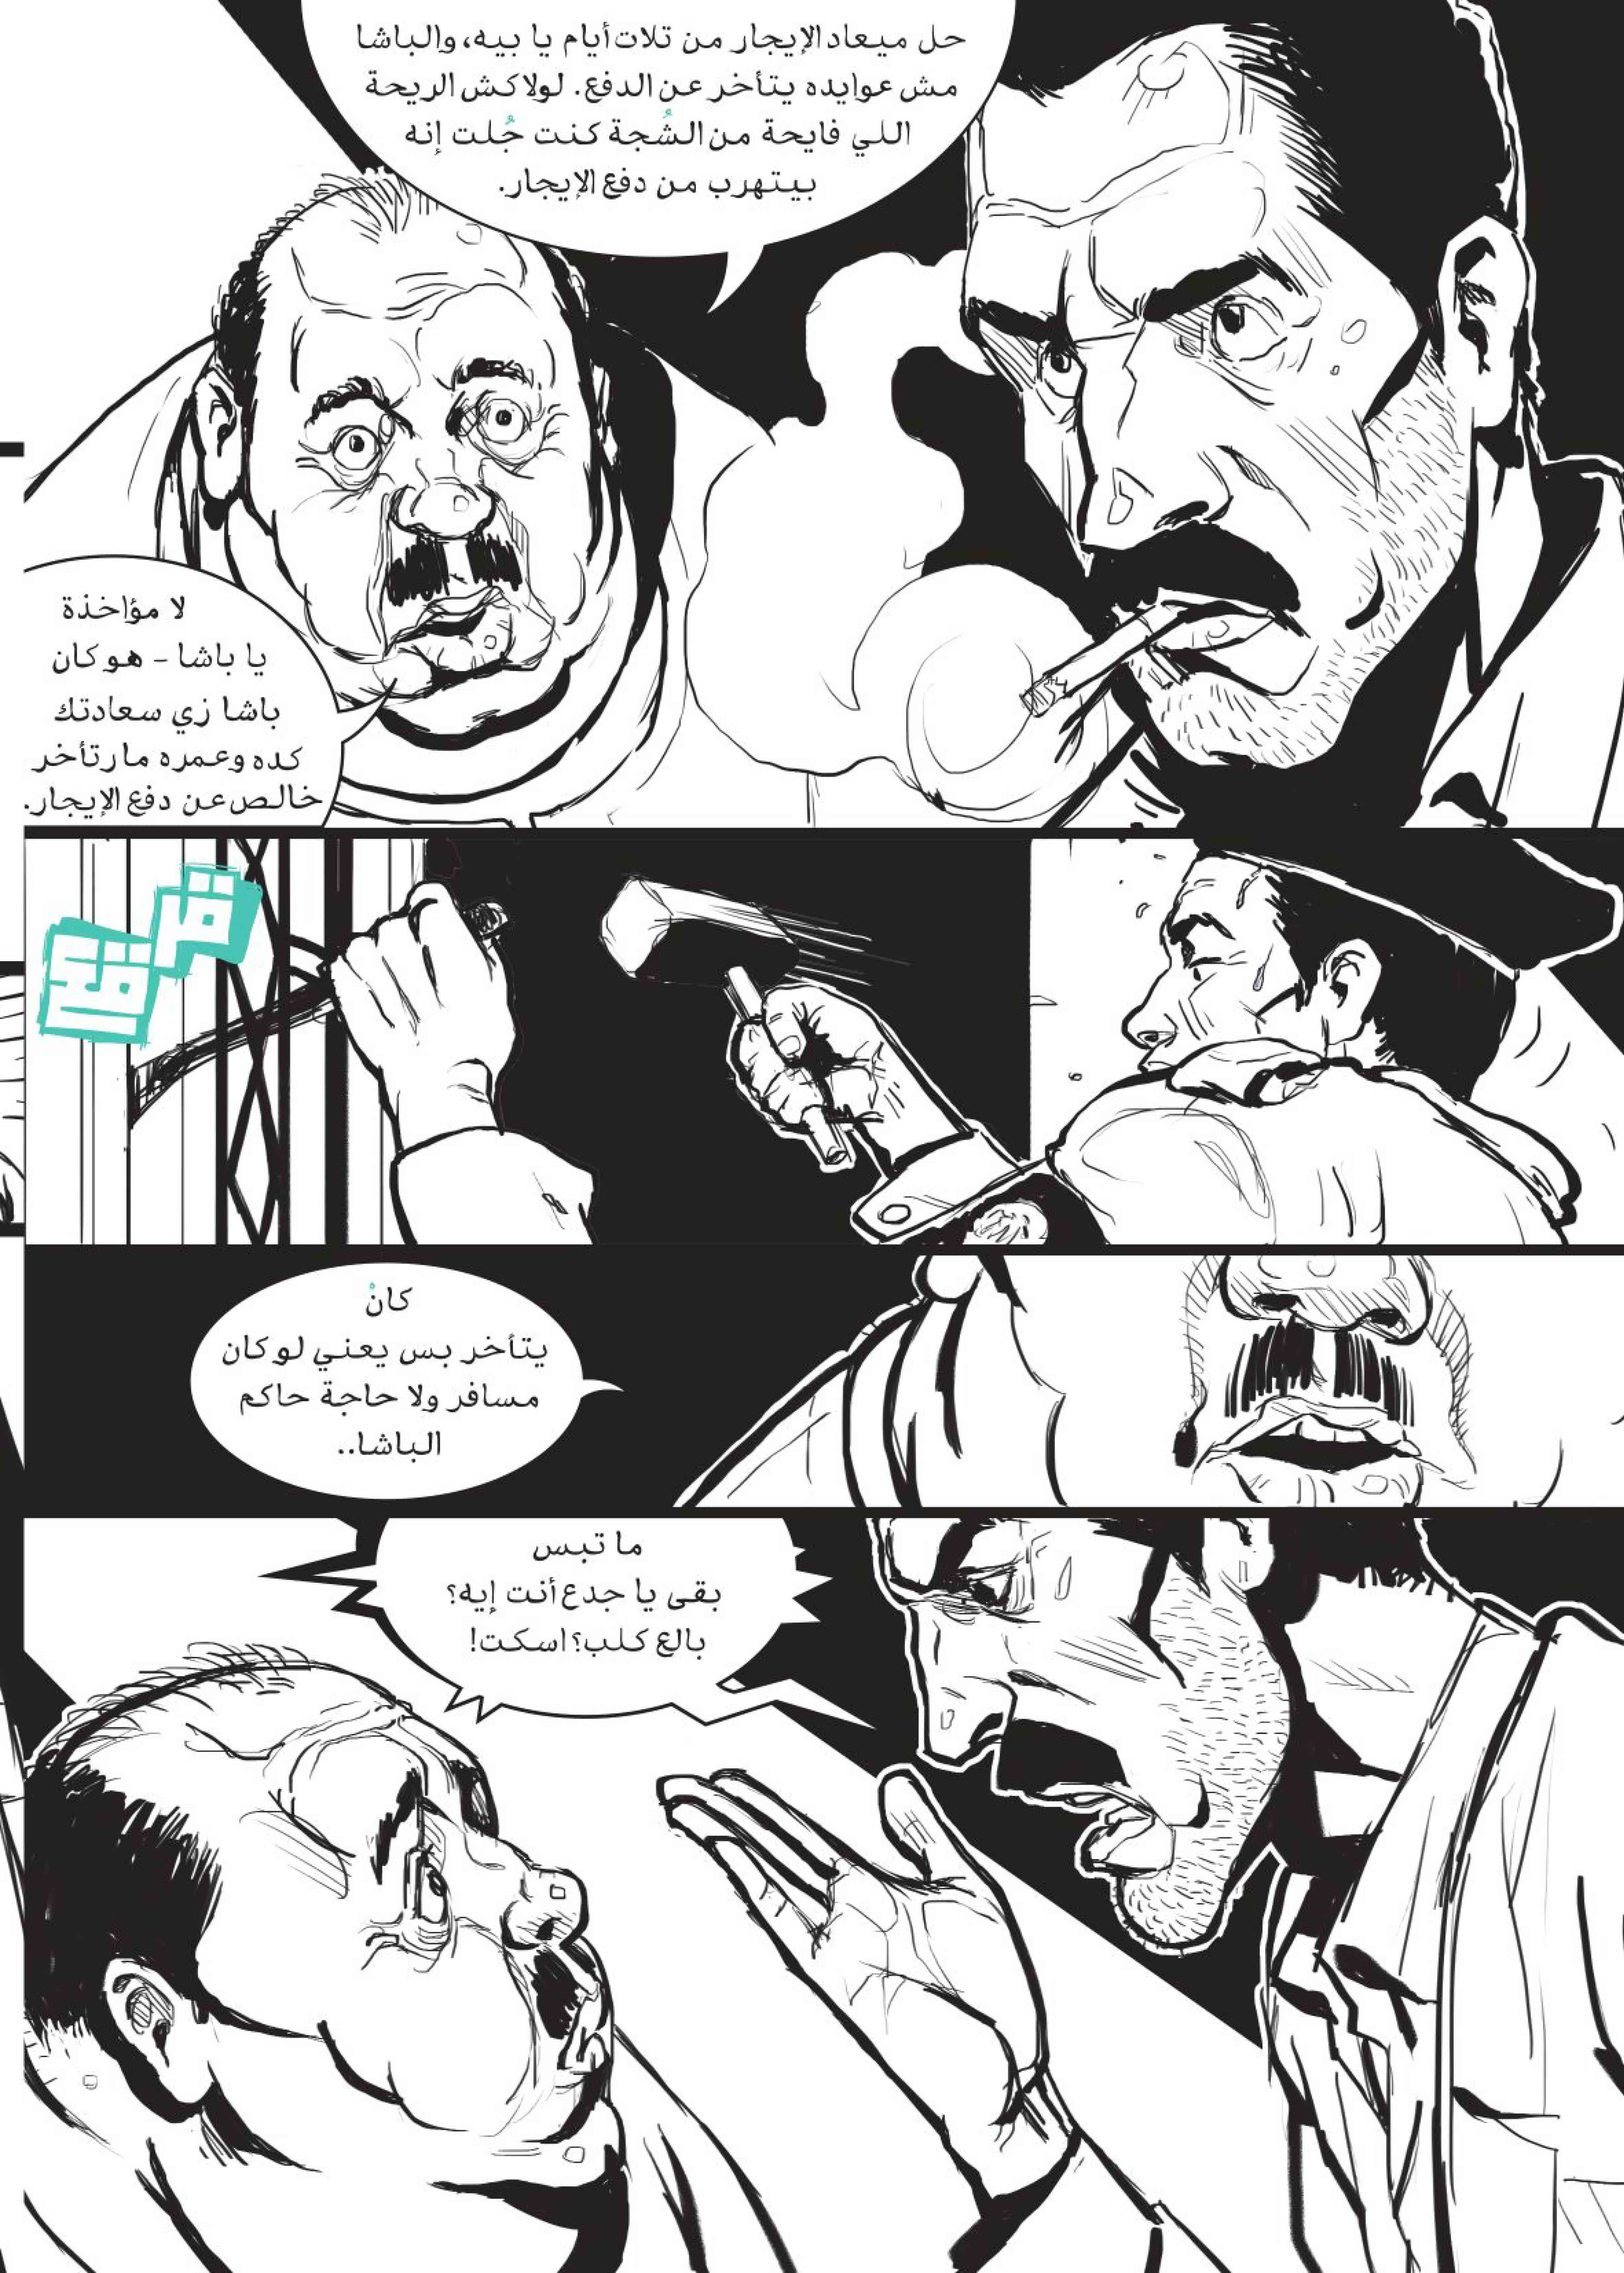 works_on_comics_in_the_arab_countries_3.jpg